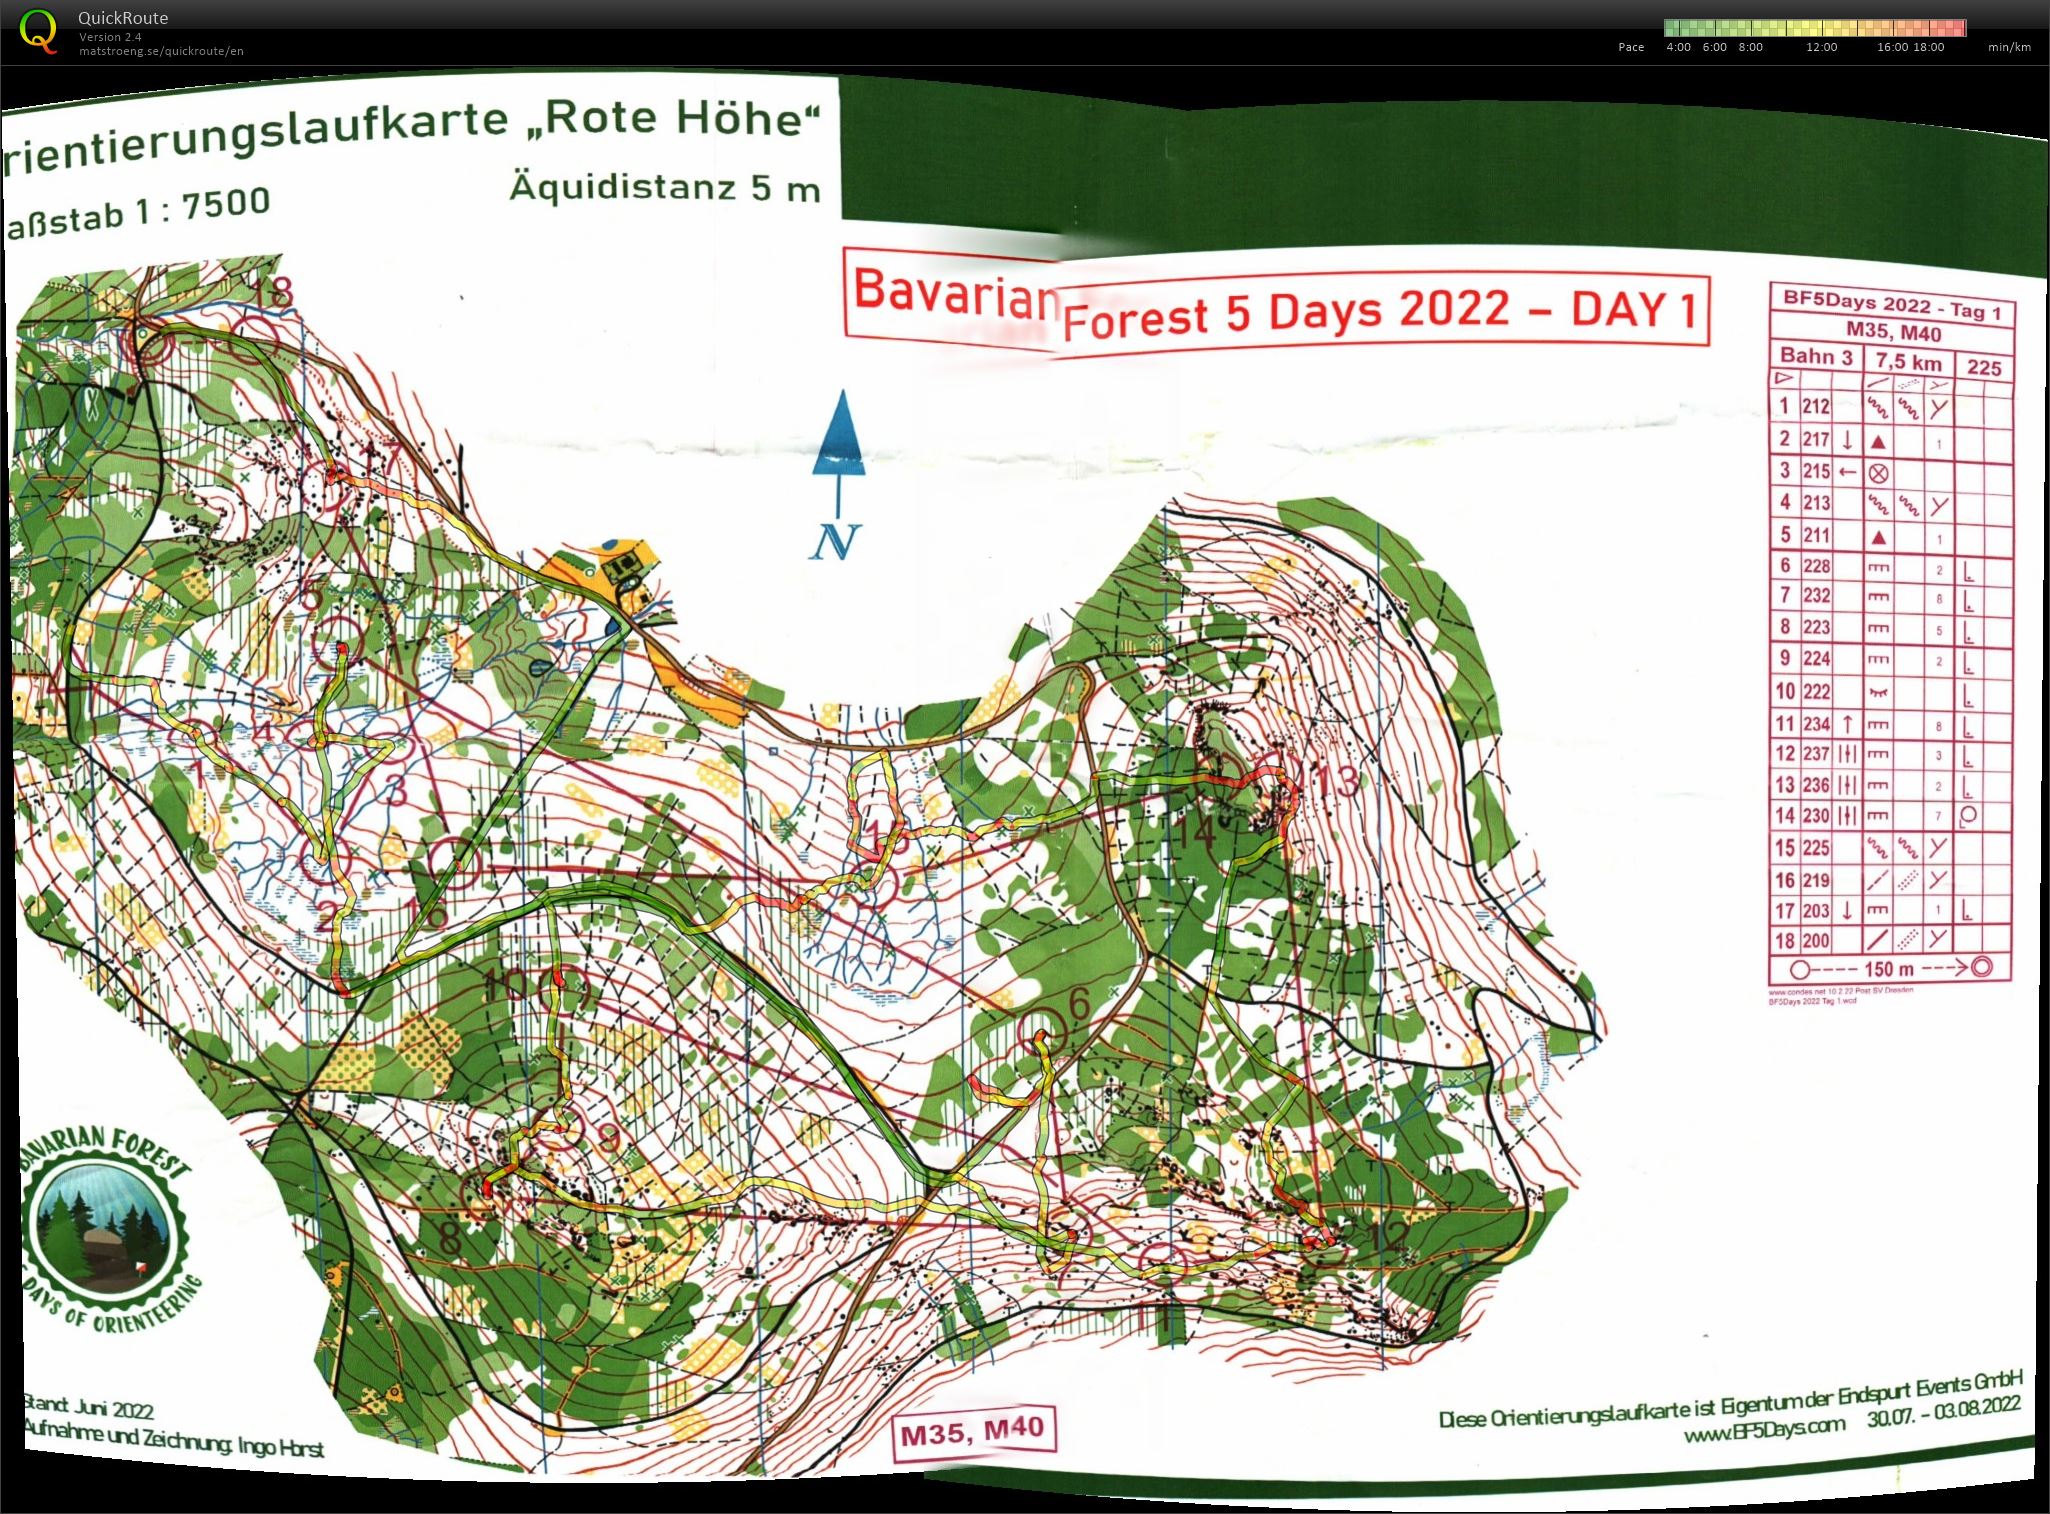 Bavarian Forest 5 Days - Day 1 (30-07-2022)